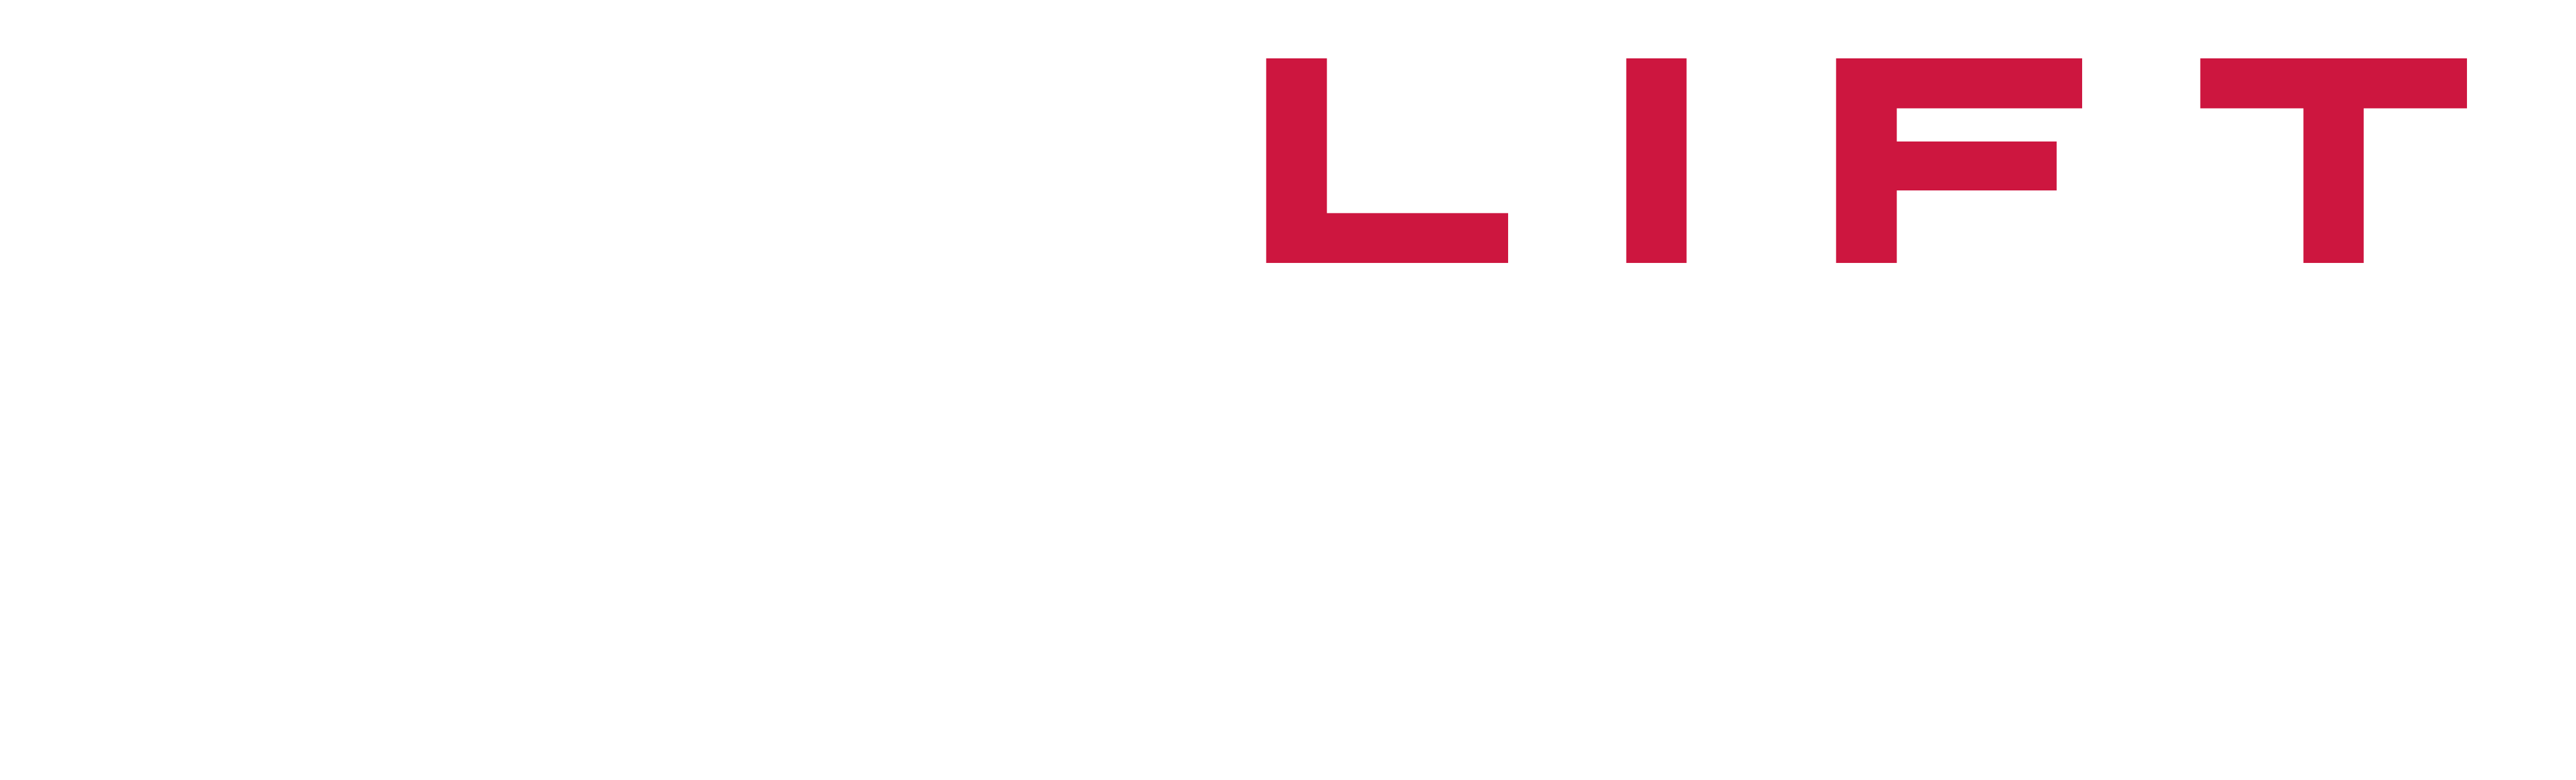 Fit & Lift